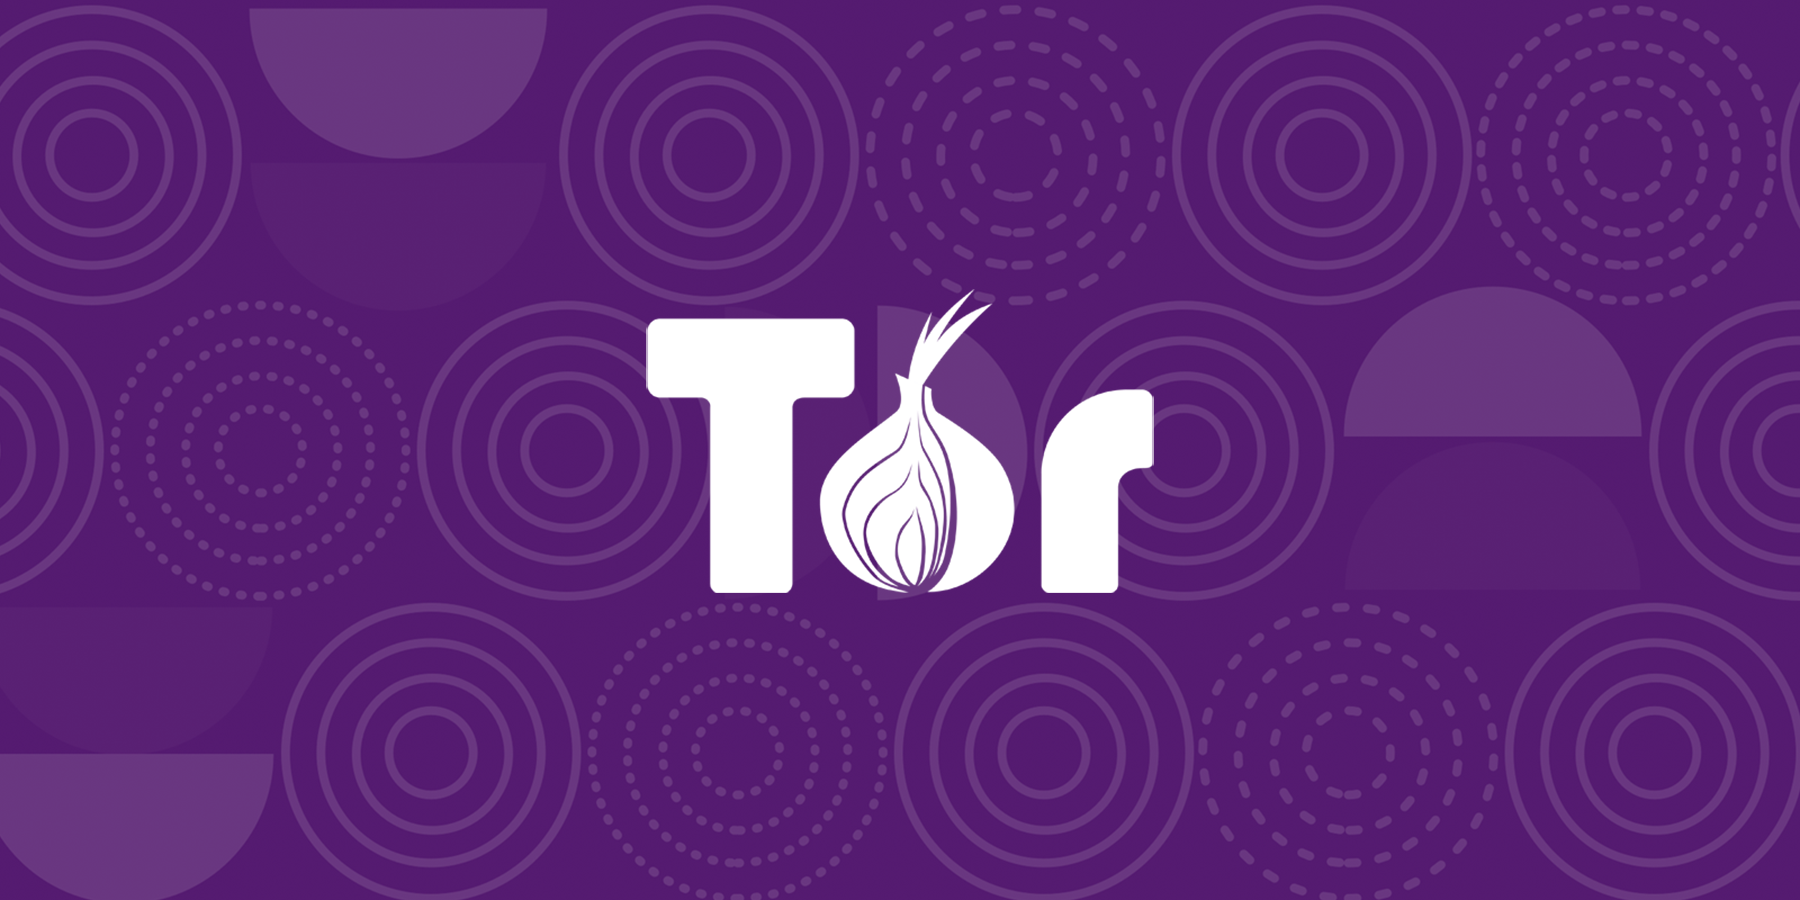 Obtaining Tor Browser